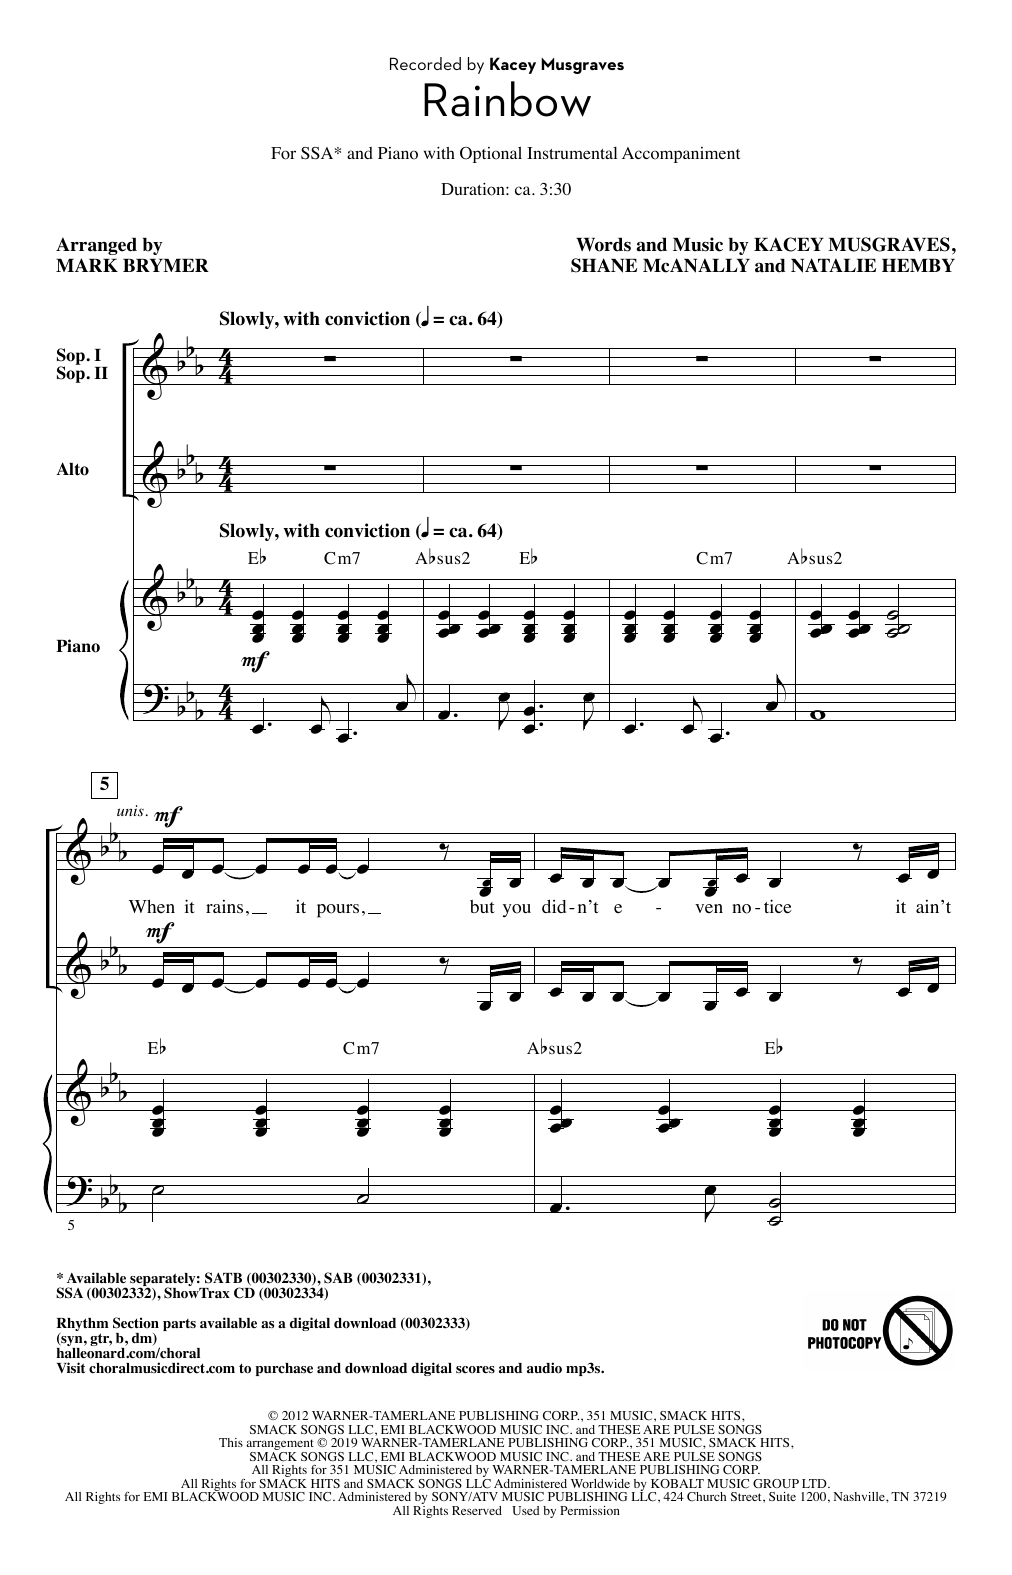 Kacey Musgraves Rainbow (arr. Mark Brymer) Sheet Music Notes & Chords for SAB Choir - Download or Print PDF